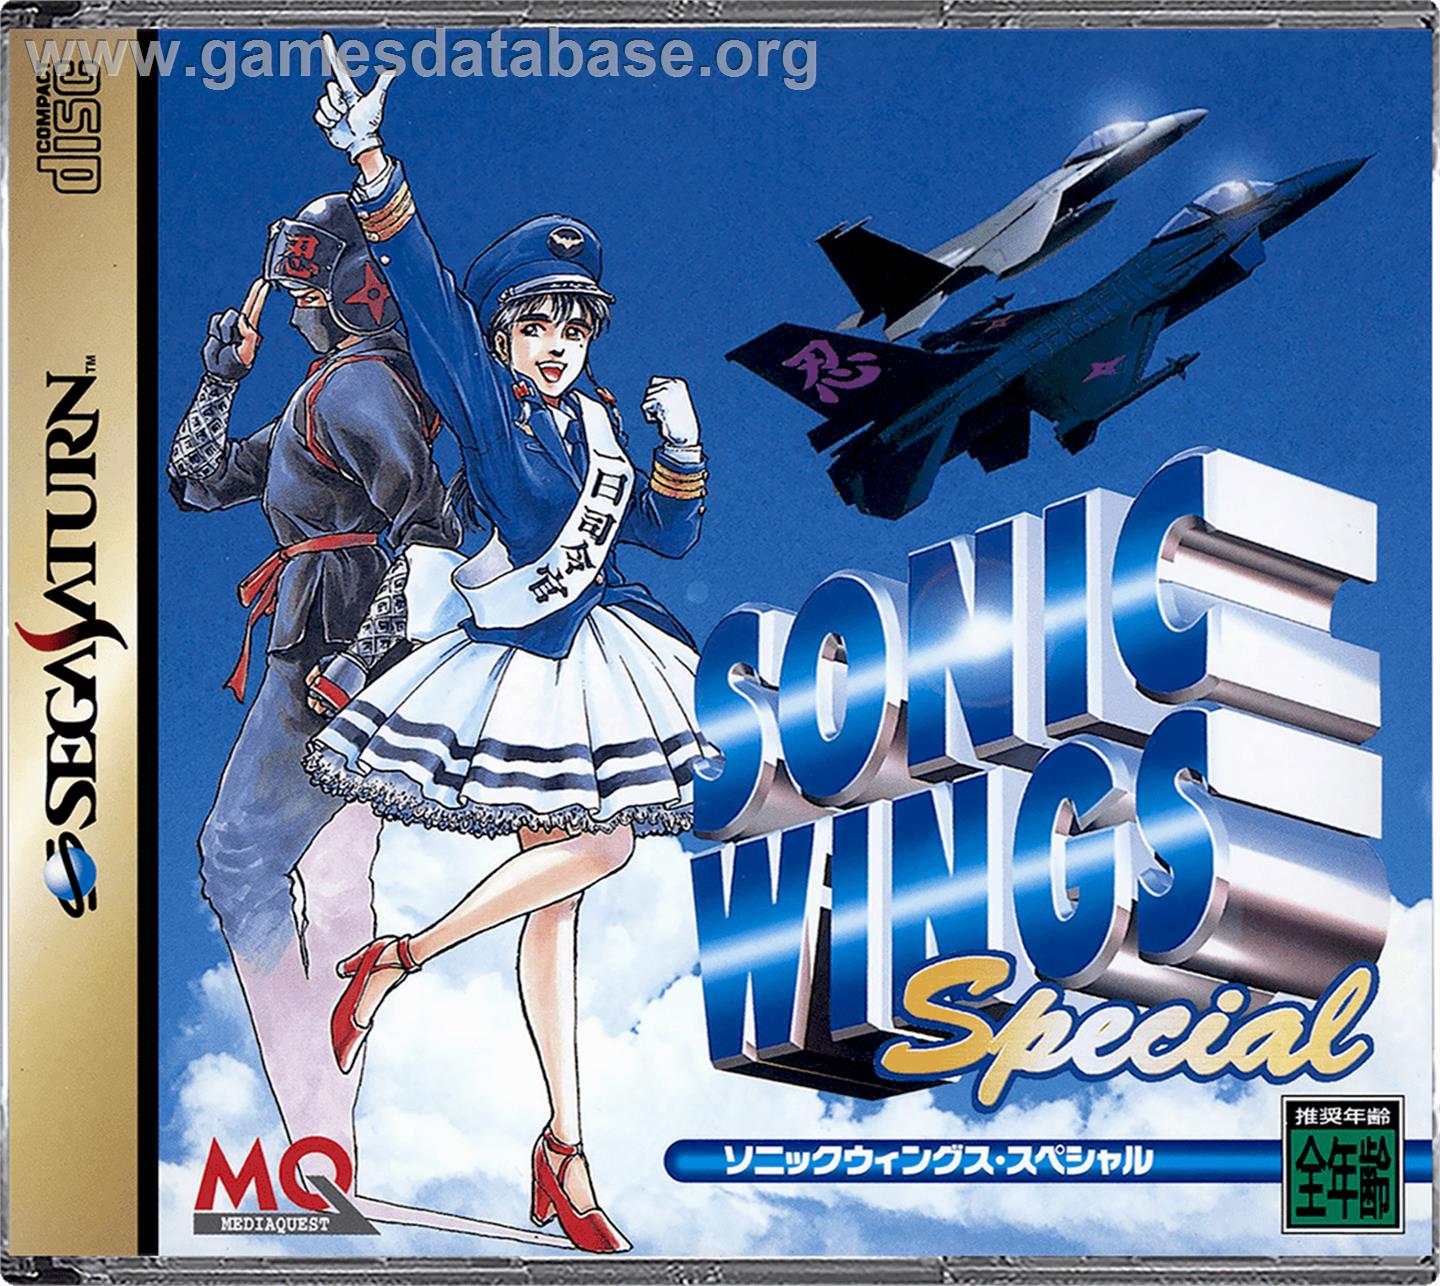 Sonic_Wings_Special_-_1996_-_MediaQuest.jpg